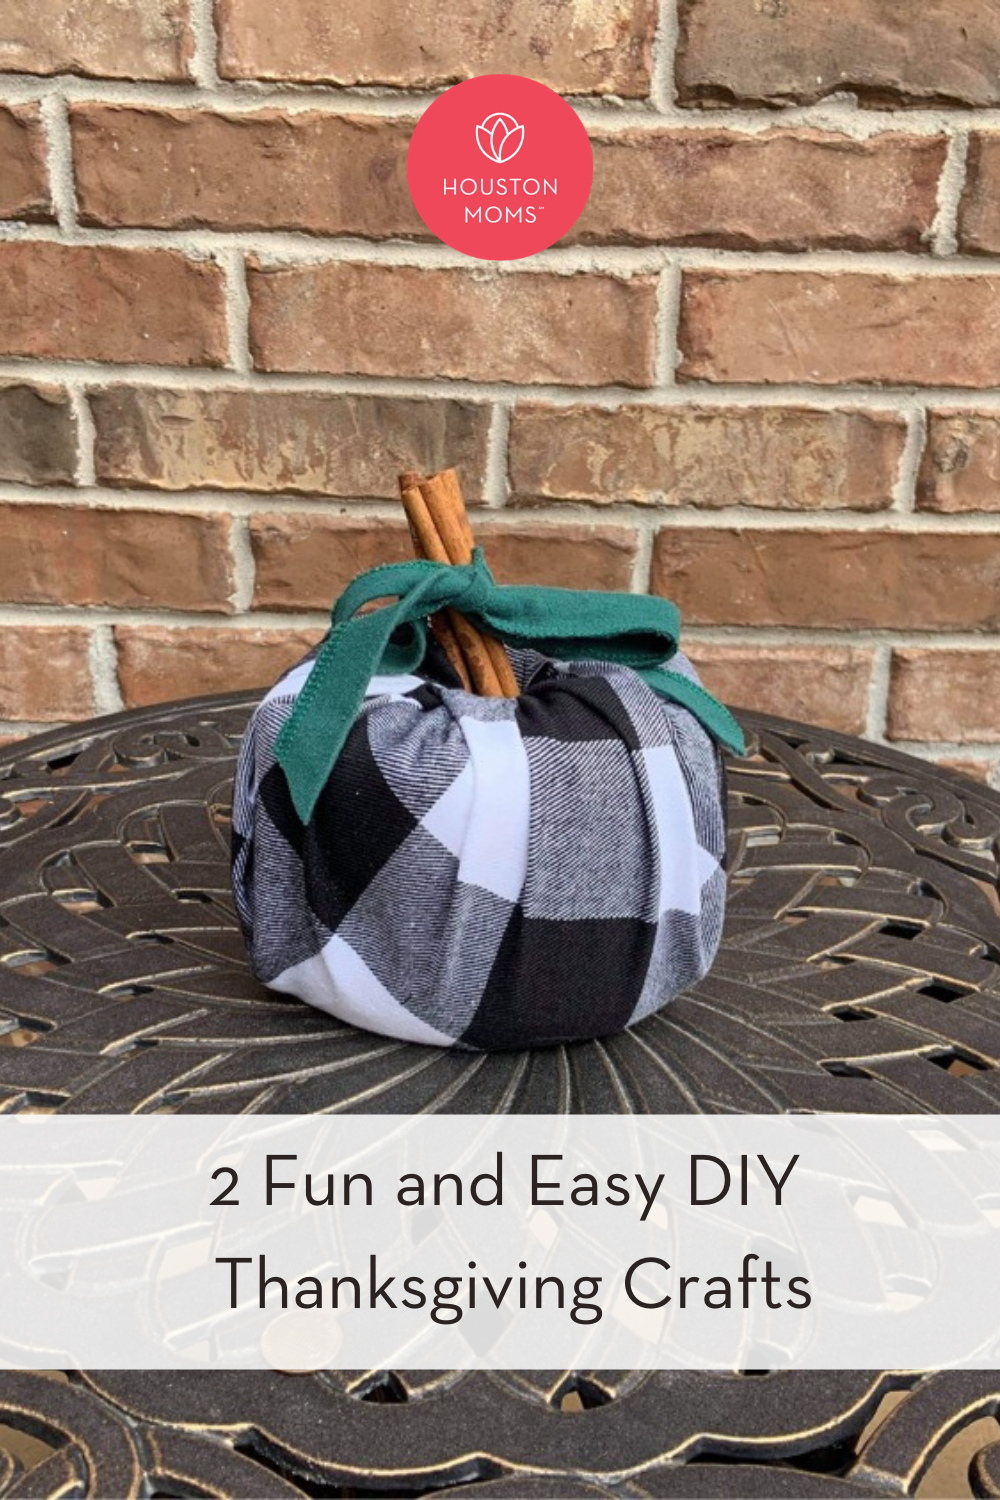 Houston Moms "2 Fun and Easy DIY Thanksgiving Crafts" #houstonmoms #houstonmomsblog #momsaroundhouston